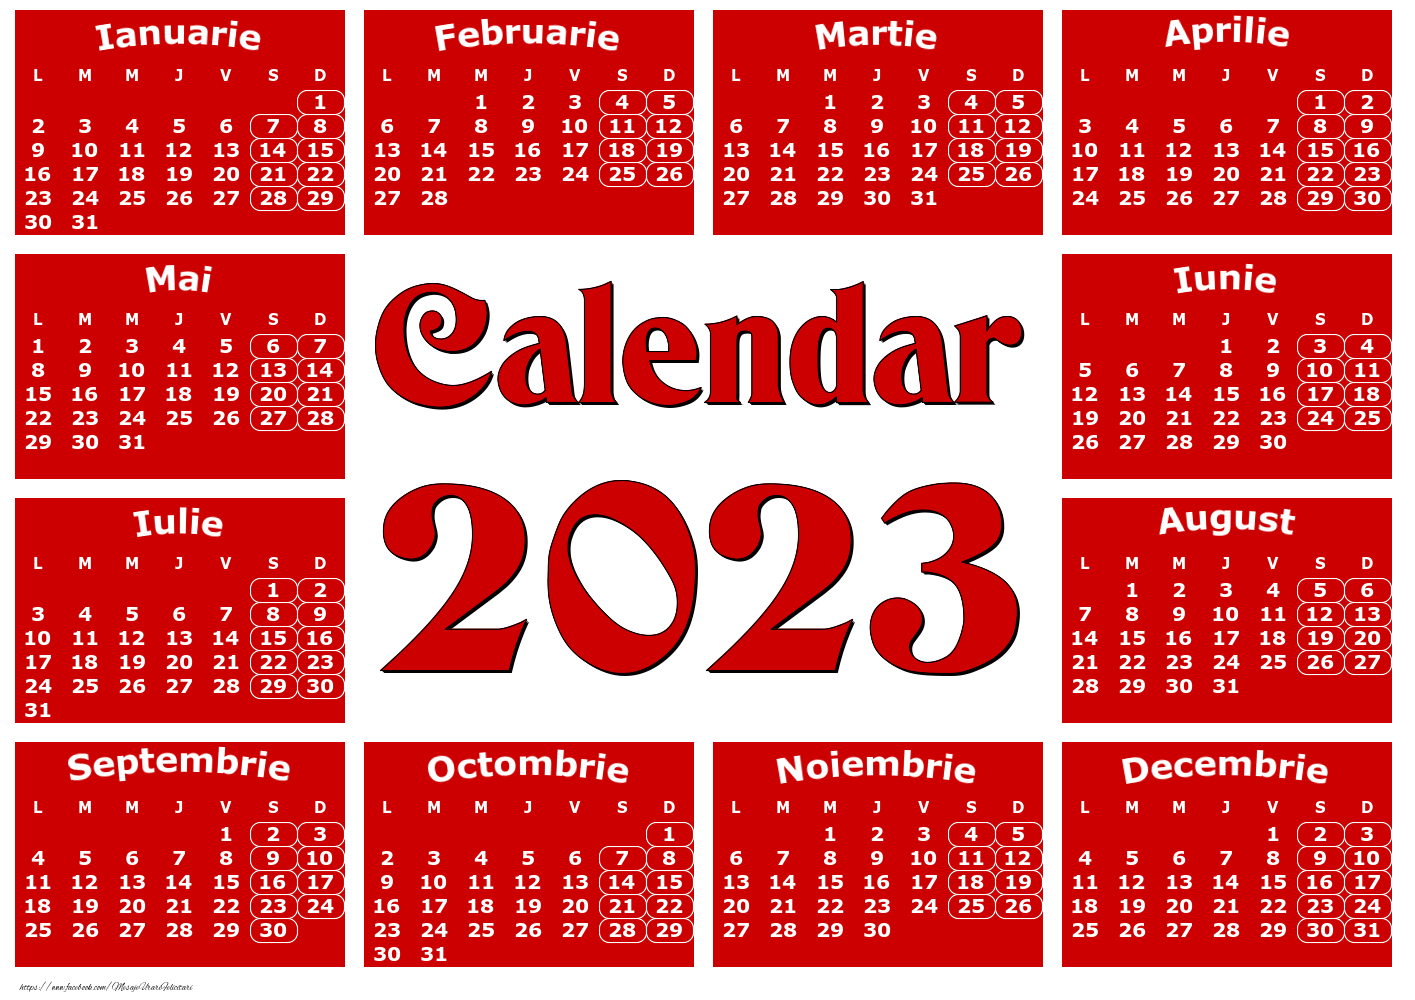 Imagini cu calendare - Calendar 2023 - Clasic Rosu - Model 001 - mesajeurarifelicitari.com